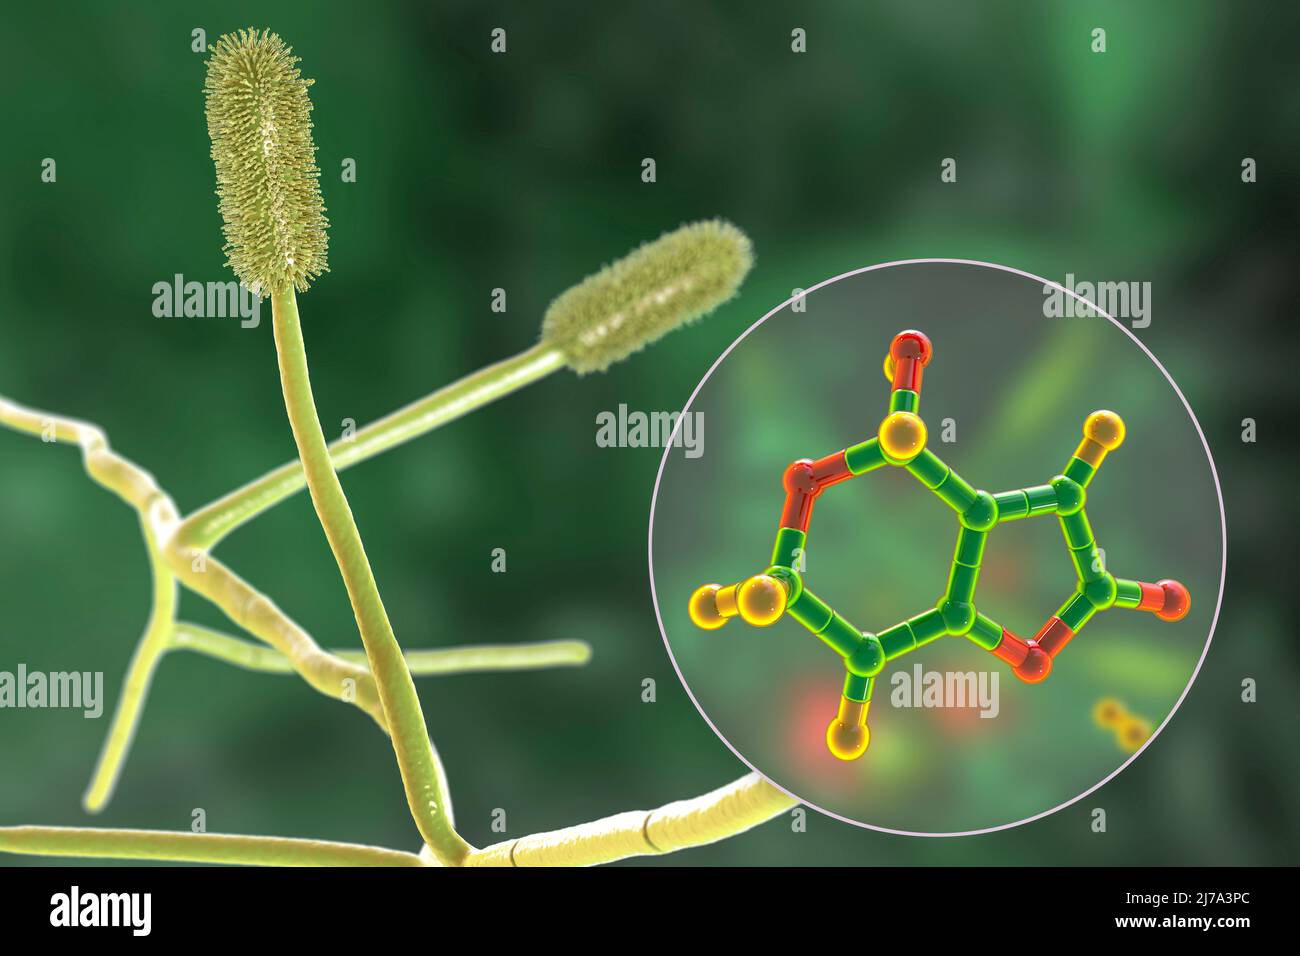 Aspergillus clavatus mould fungi and molecule of patulin toxin, illustration Stock Photo